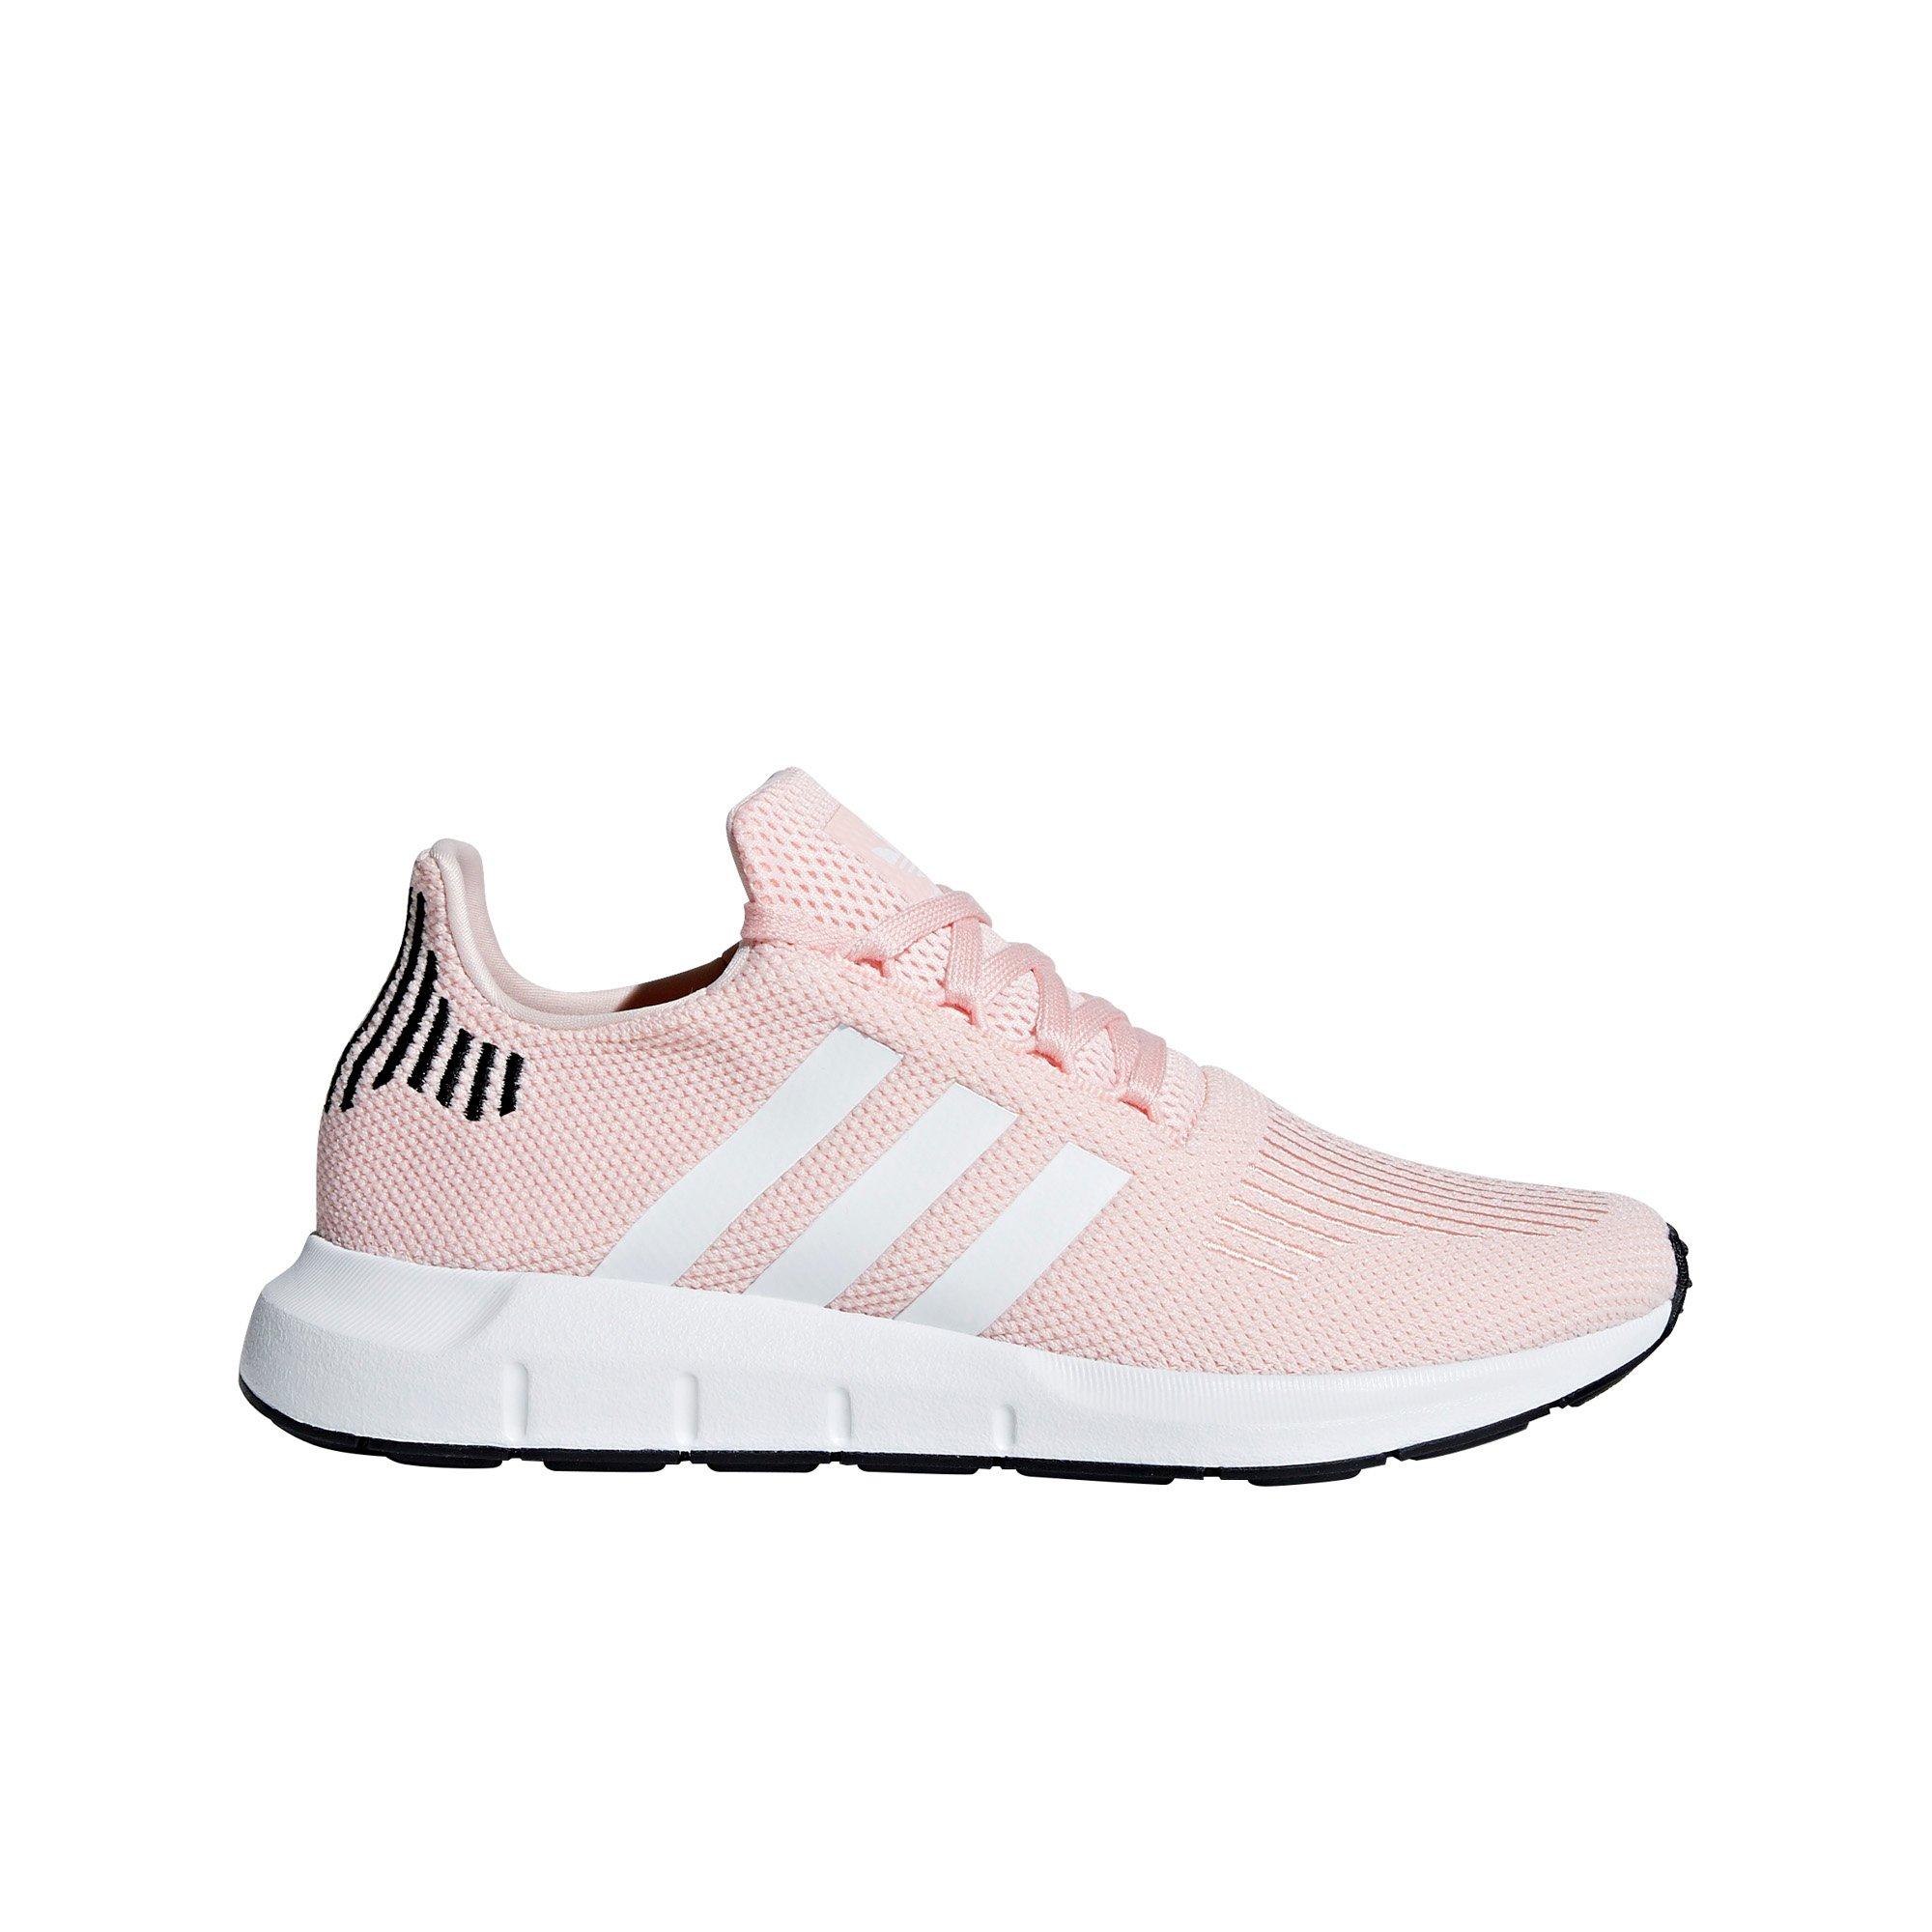 adidas swift run grey pink